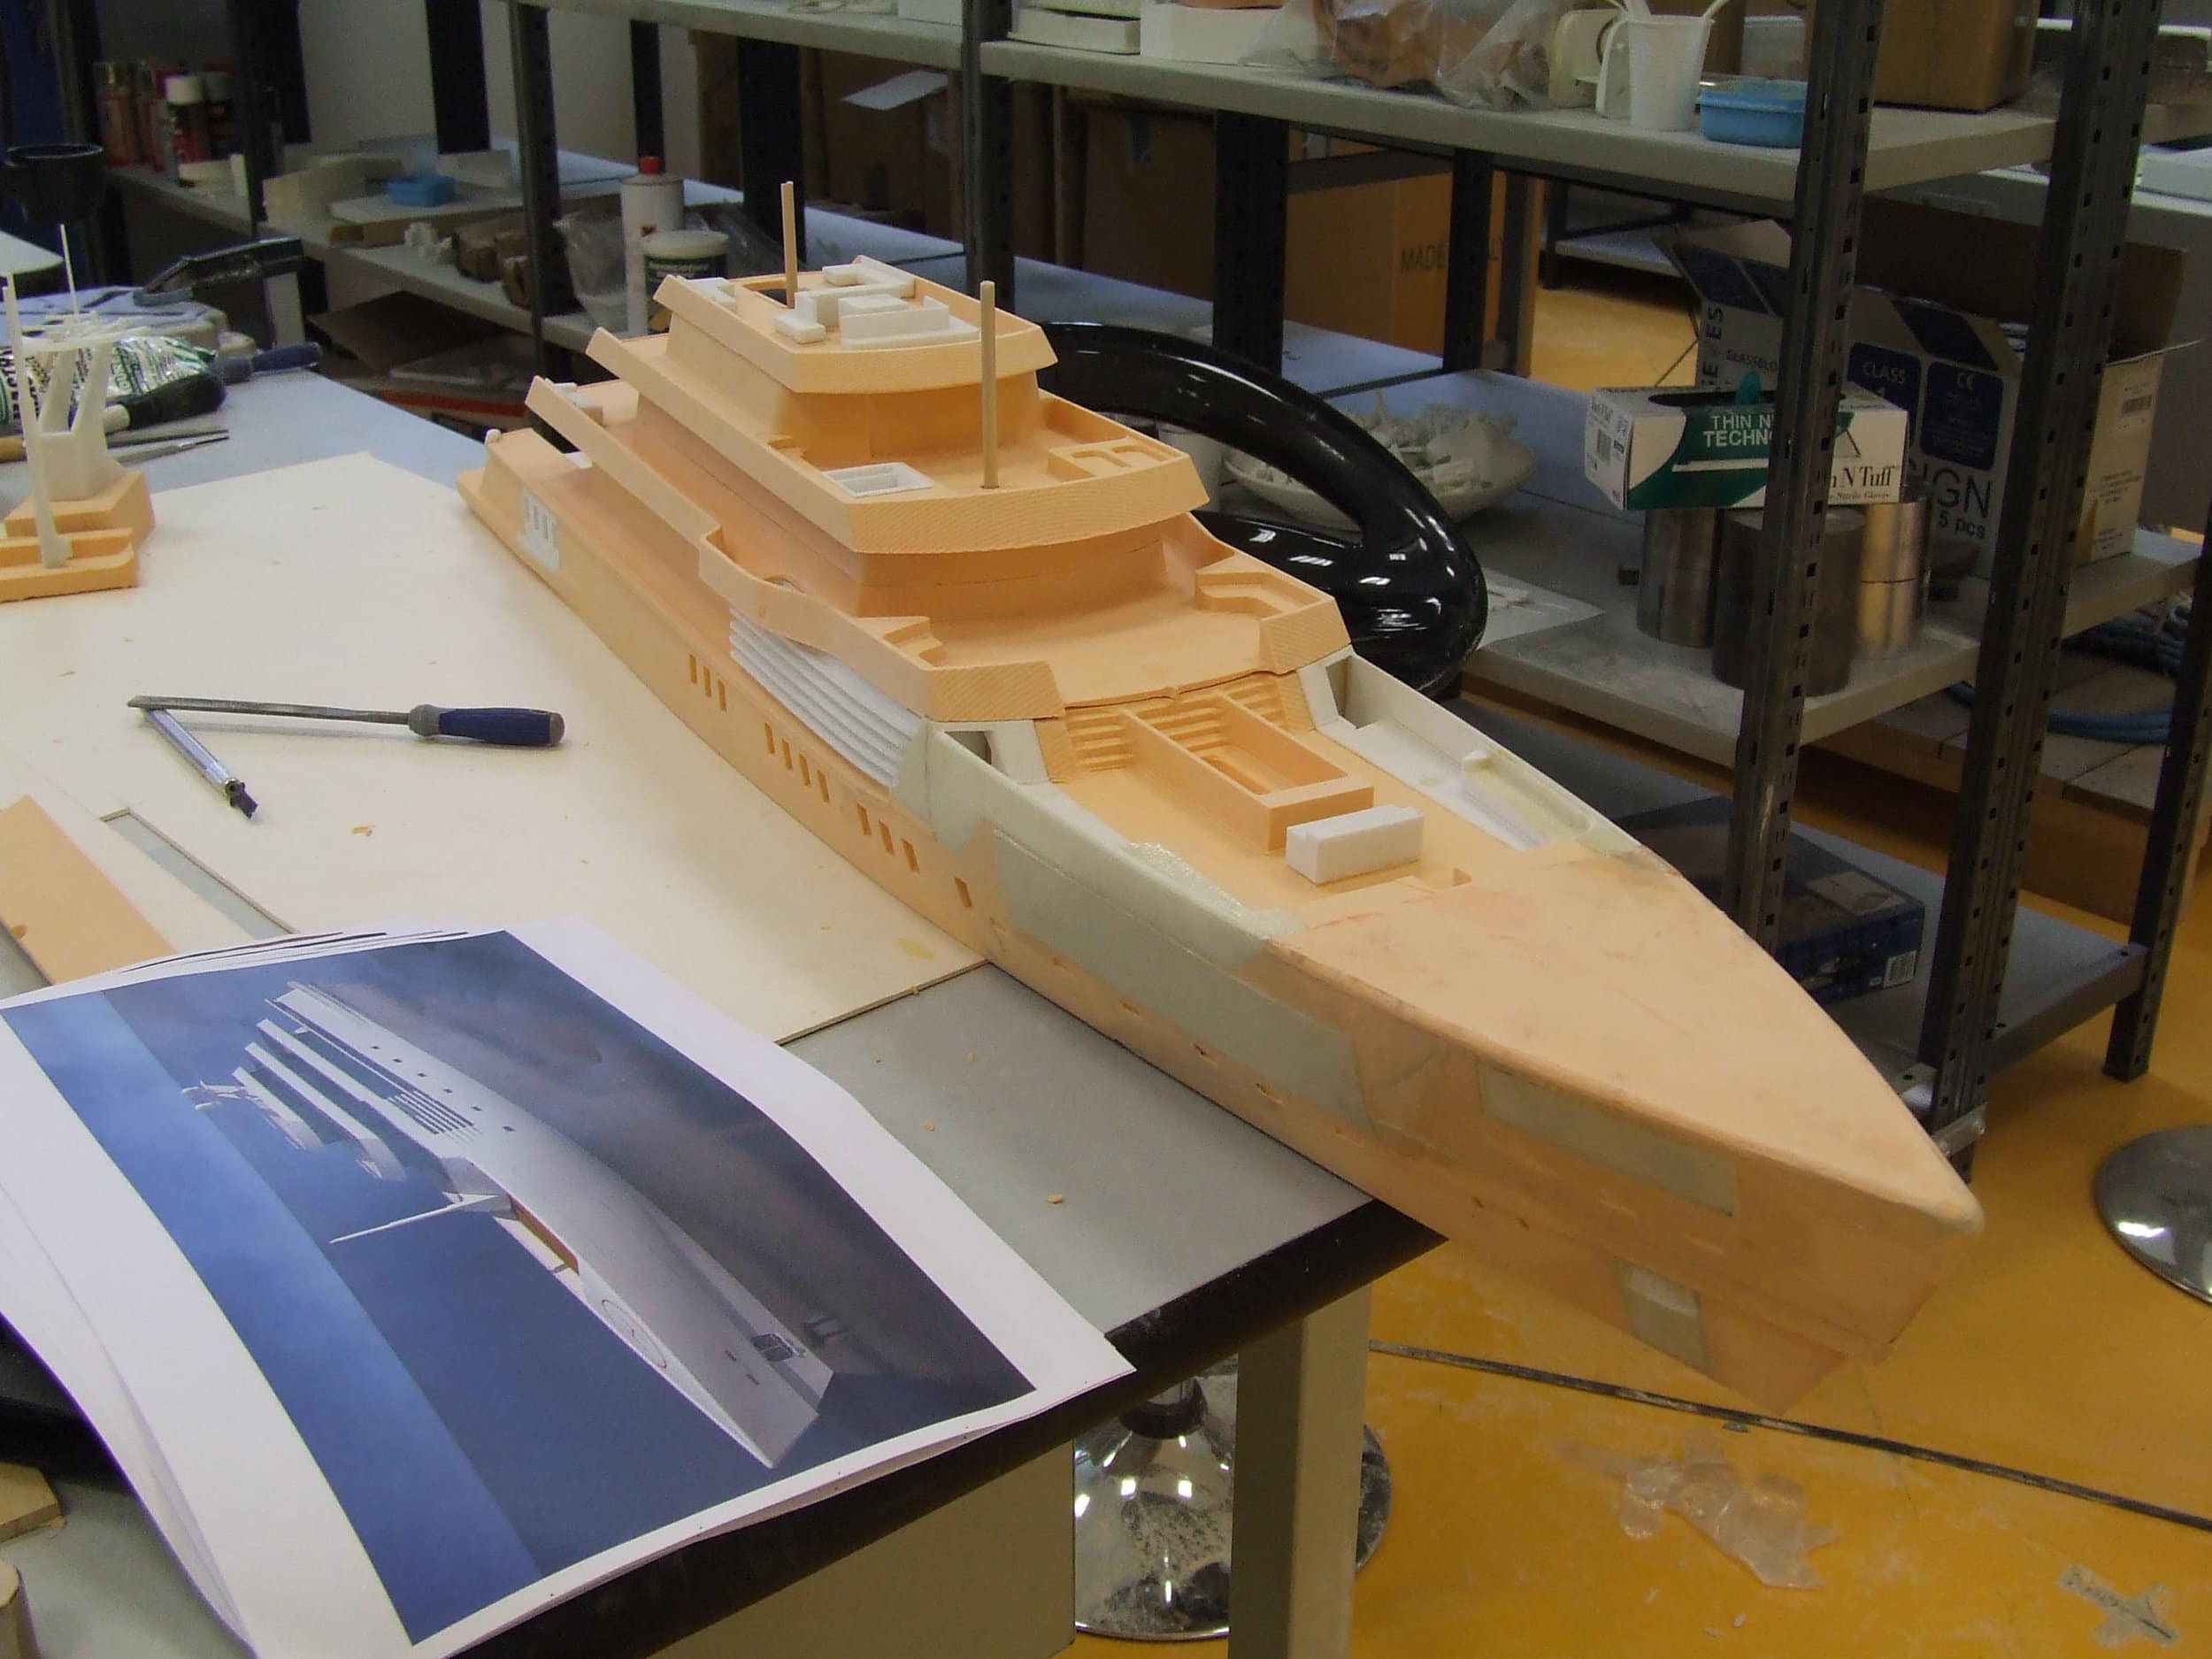 72m-concept-yacht-design-architect+carignani-scale-model-1